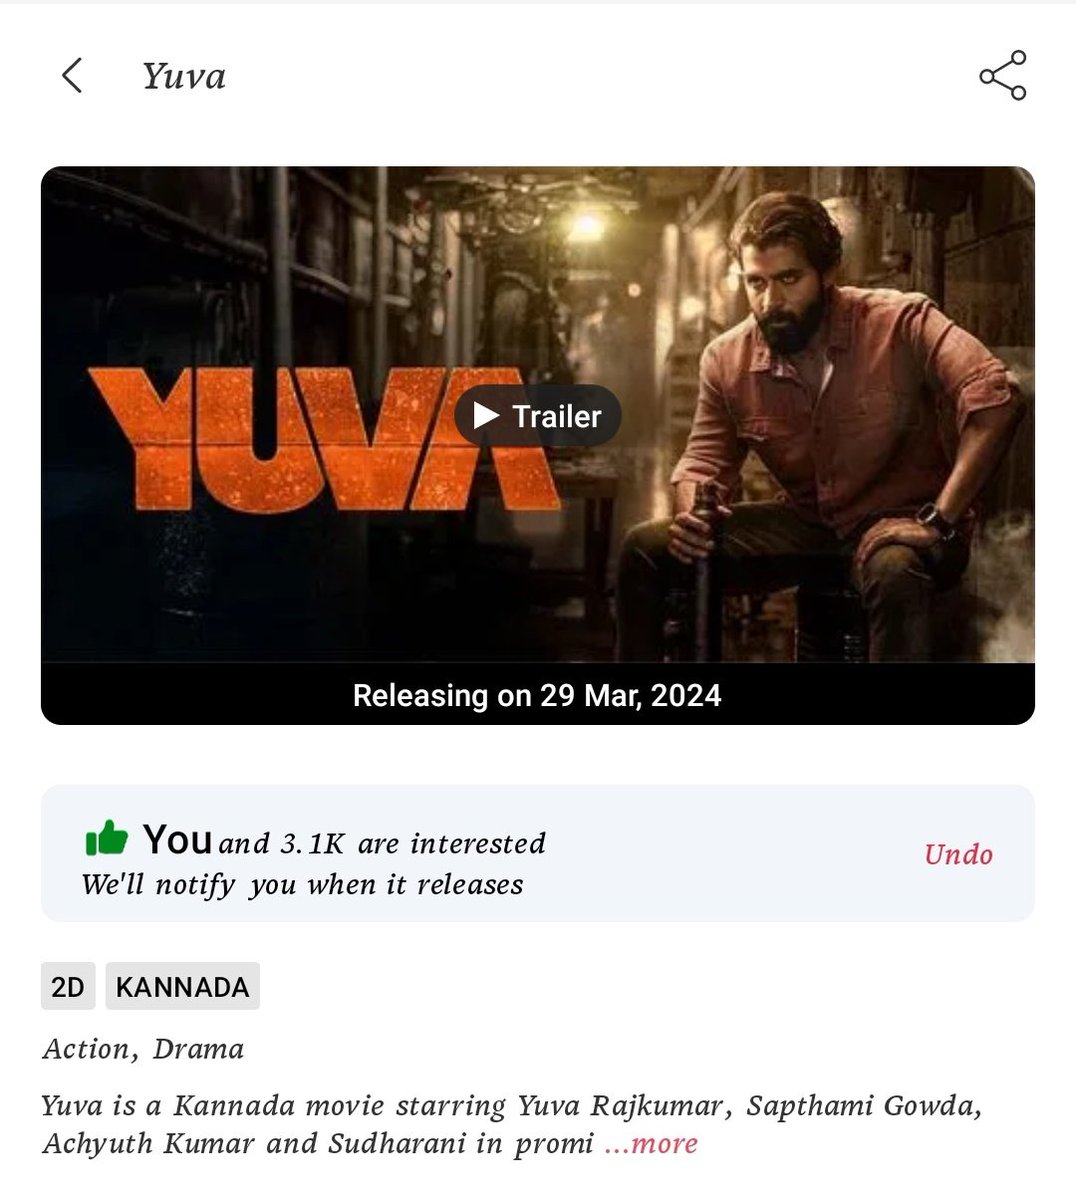 Finally, 3.1K people hit the  interested button for #Yuva #YuvaTheFilm
@YuvaTheFilm @yuva_rajkumar

Show some more interest on #BMS
#Yuvarajkumar #YuvaOnMarch28 #Yuvarathnaa #DrPuneethRajkumar #DrShivaRajkumar #Dodmane #DodmaneHuduga #Appu #AppuBoss